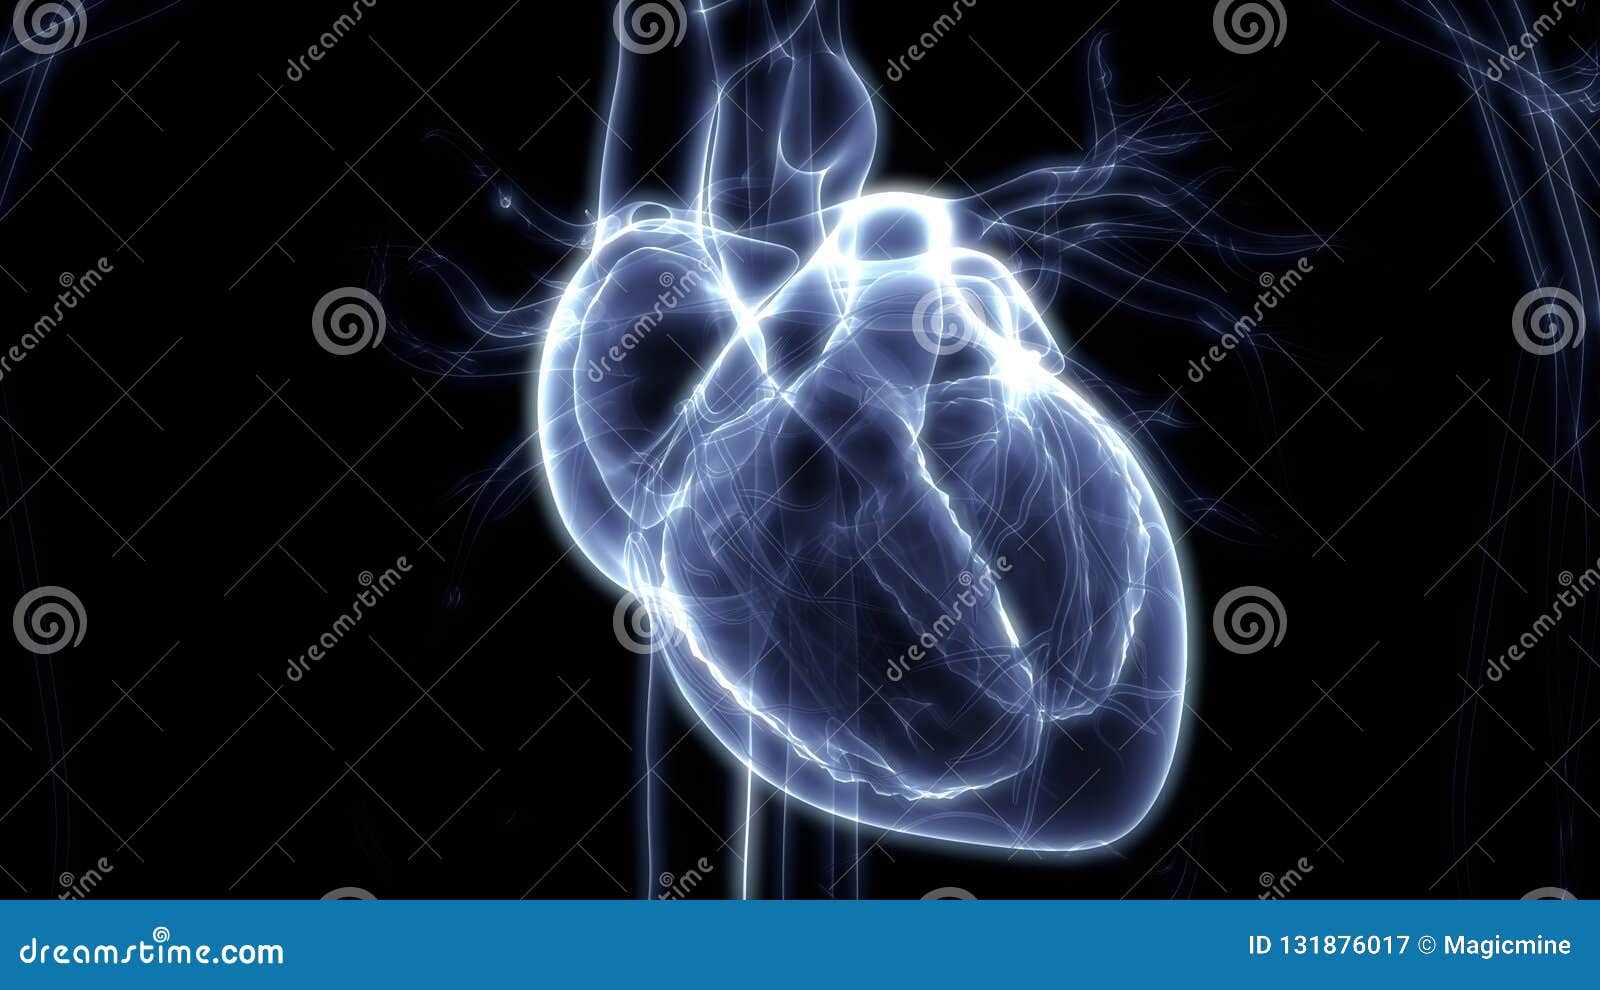 human body organs cardiovascular system with heart anatomy